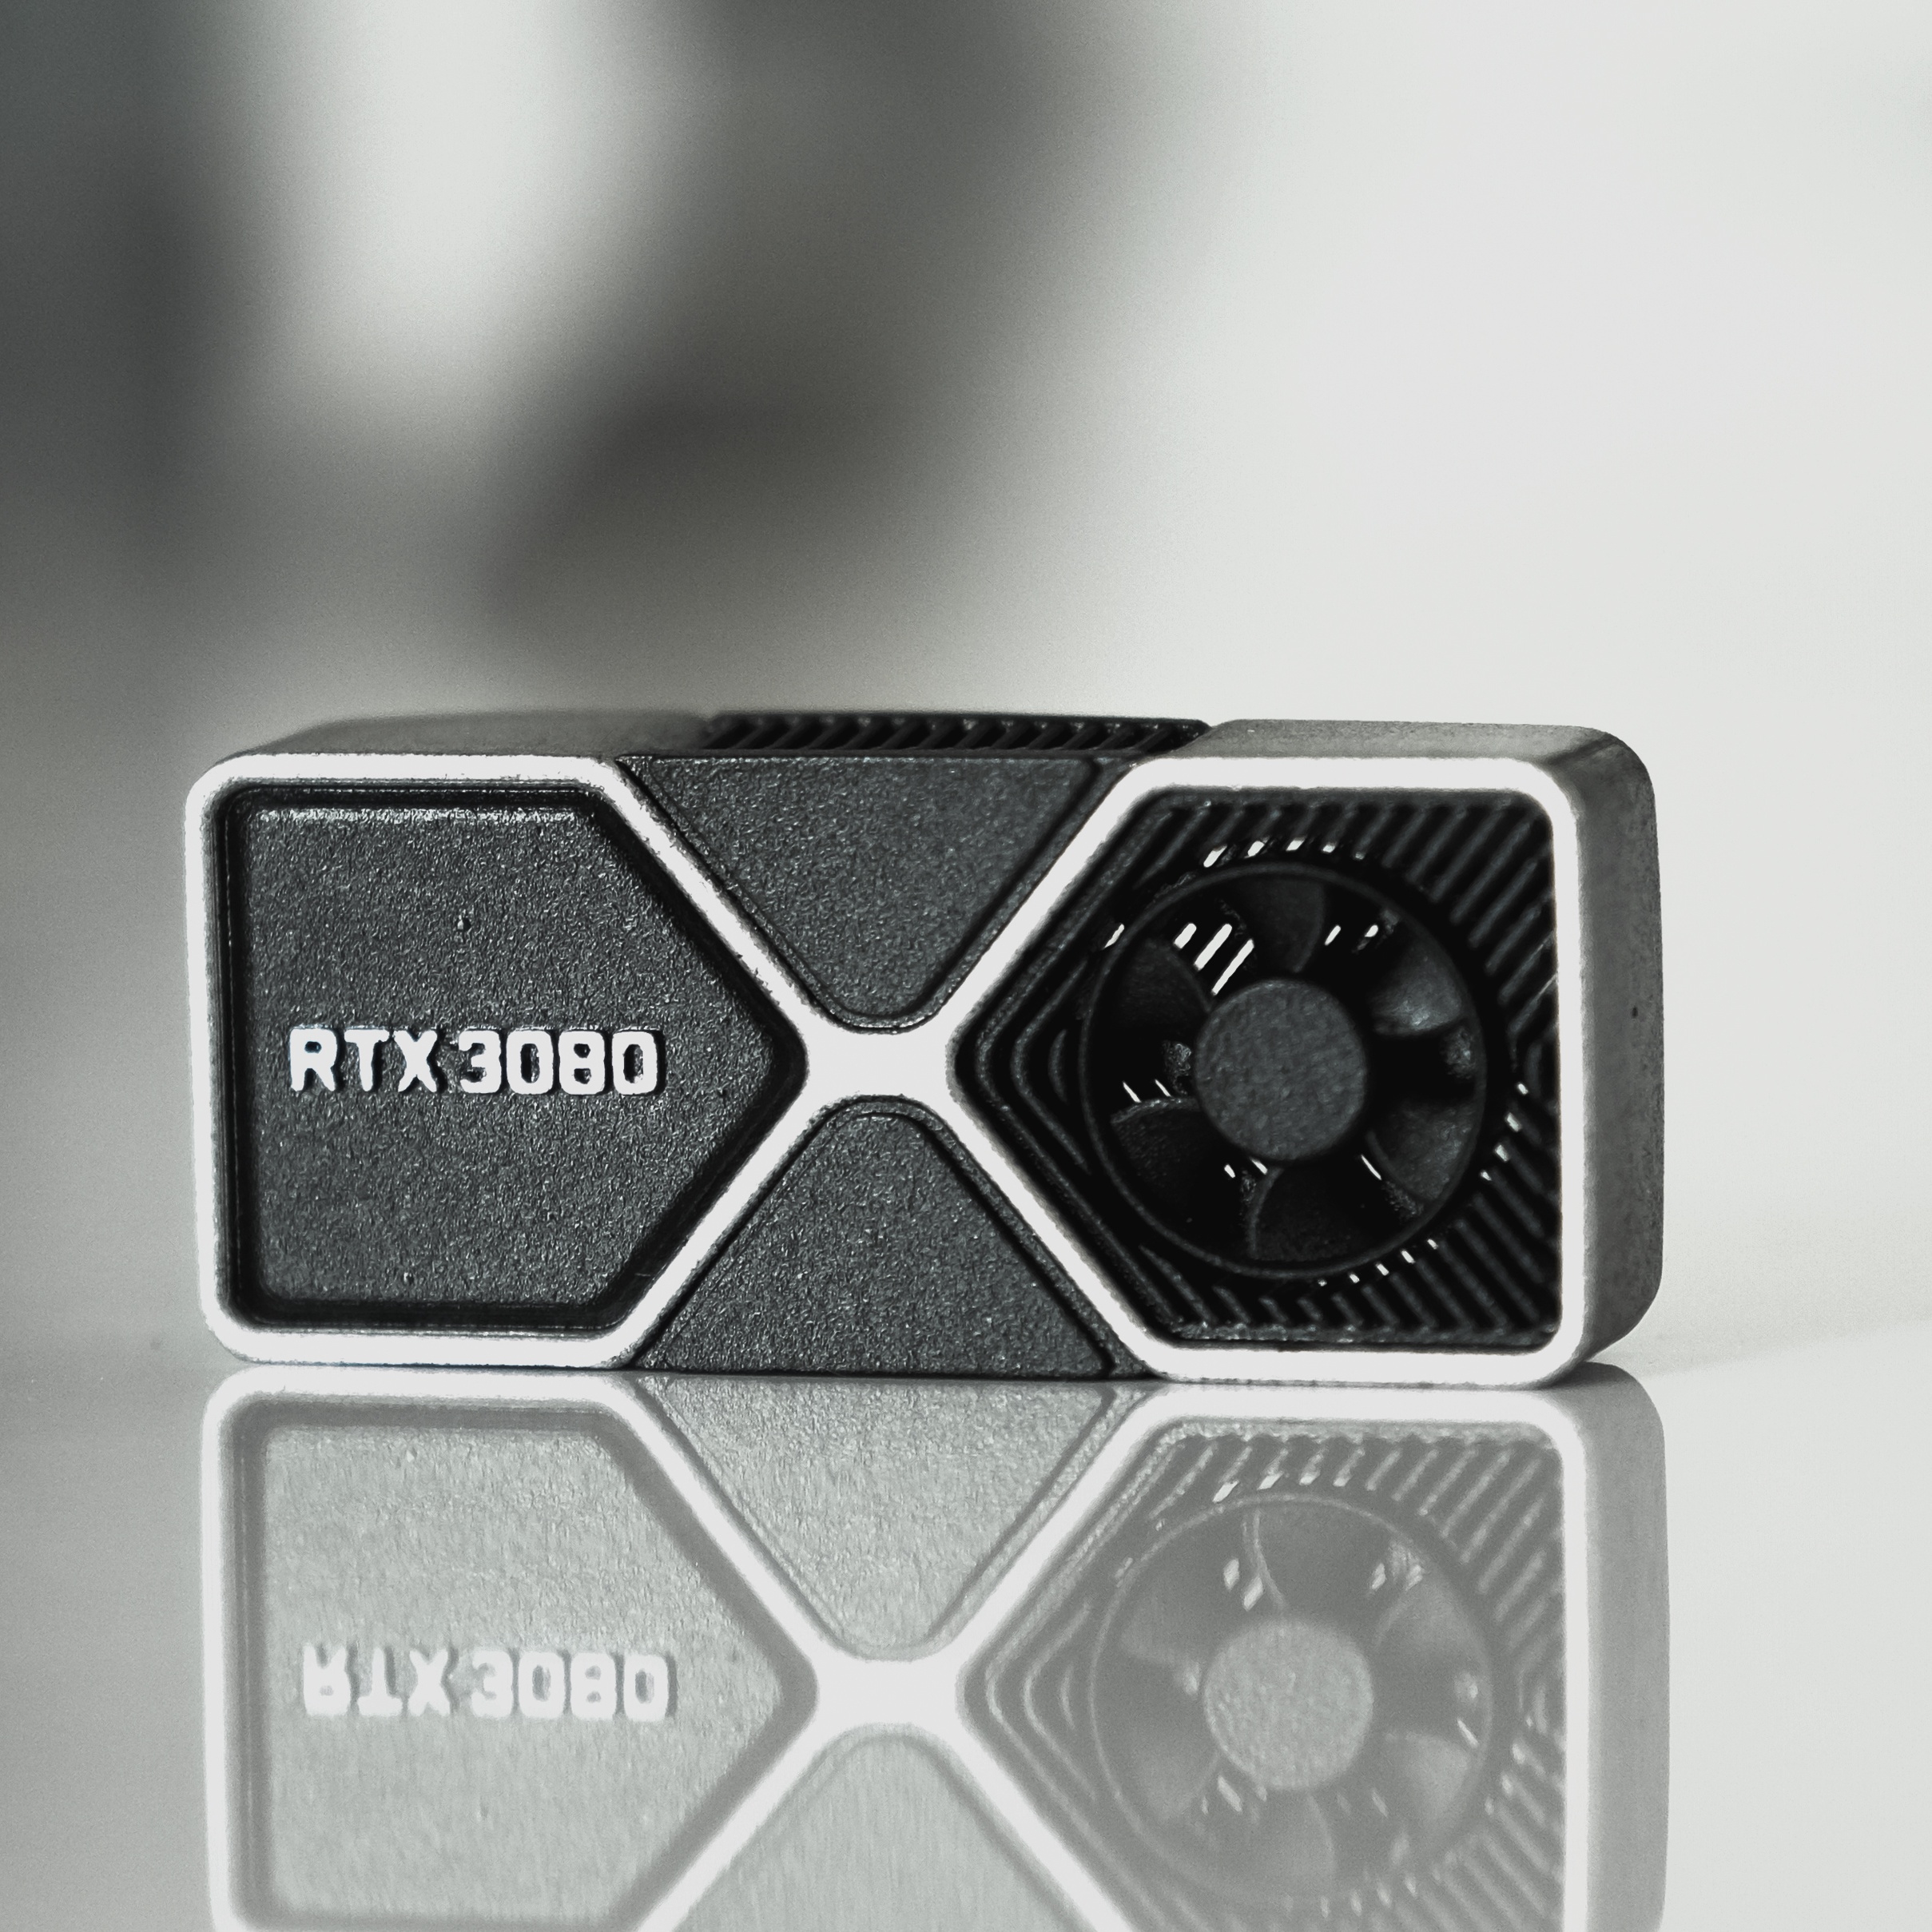 Nvidia GeForce RTX 3080 GPU in stock as a mini keycap - GameRevolution